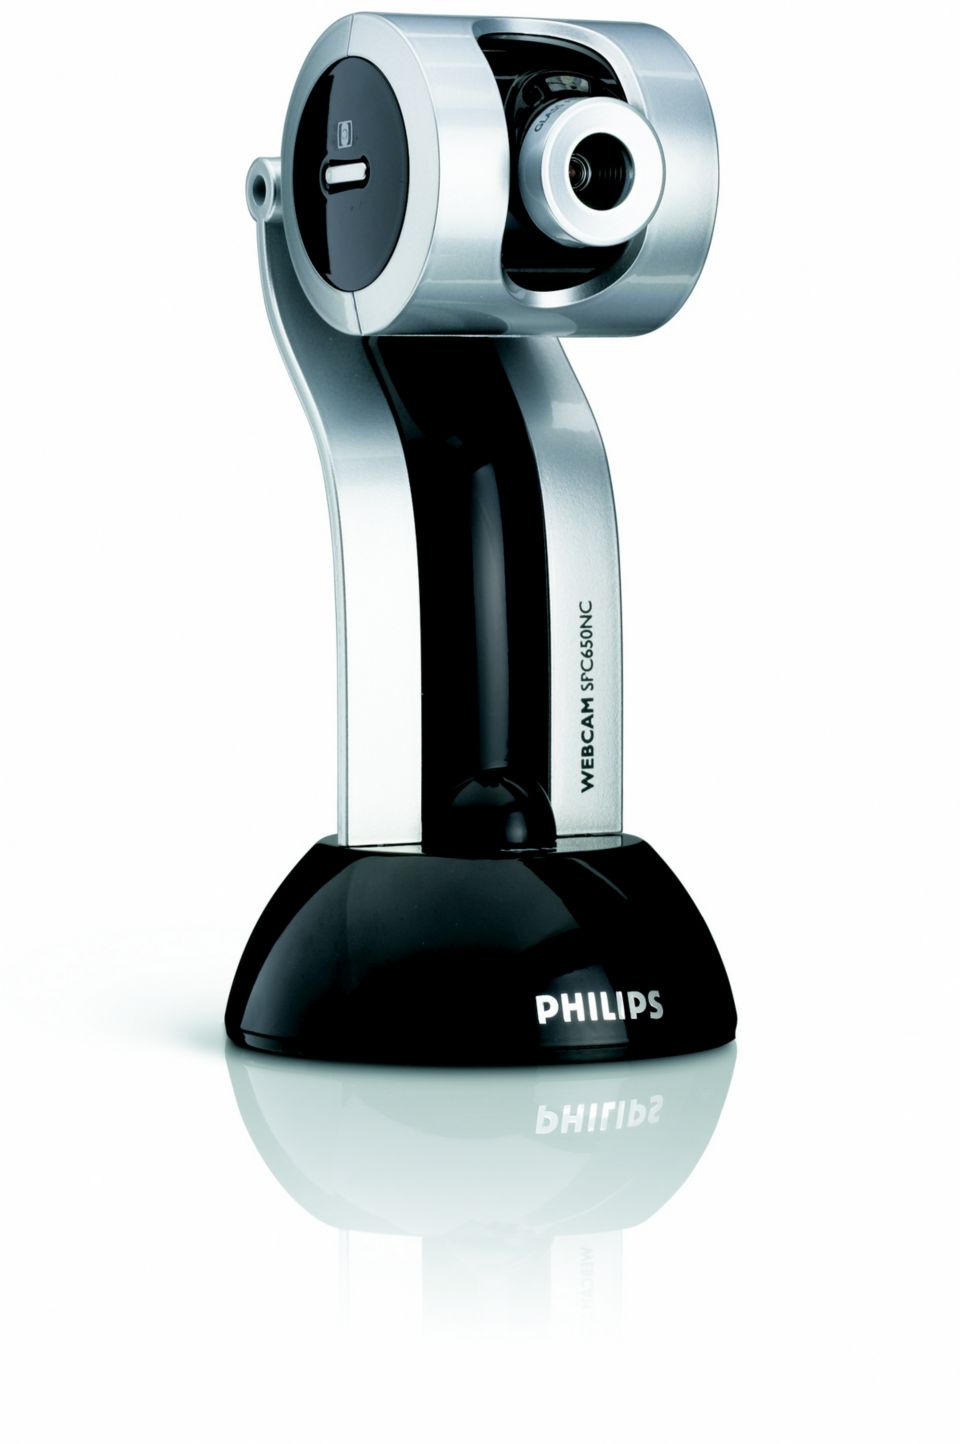 Webcam Spc650nc00 Philips